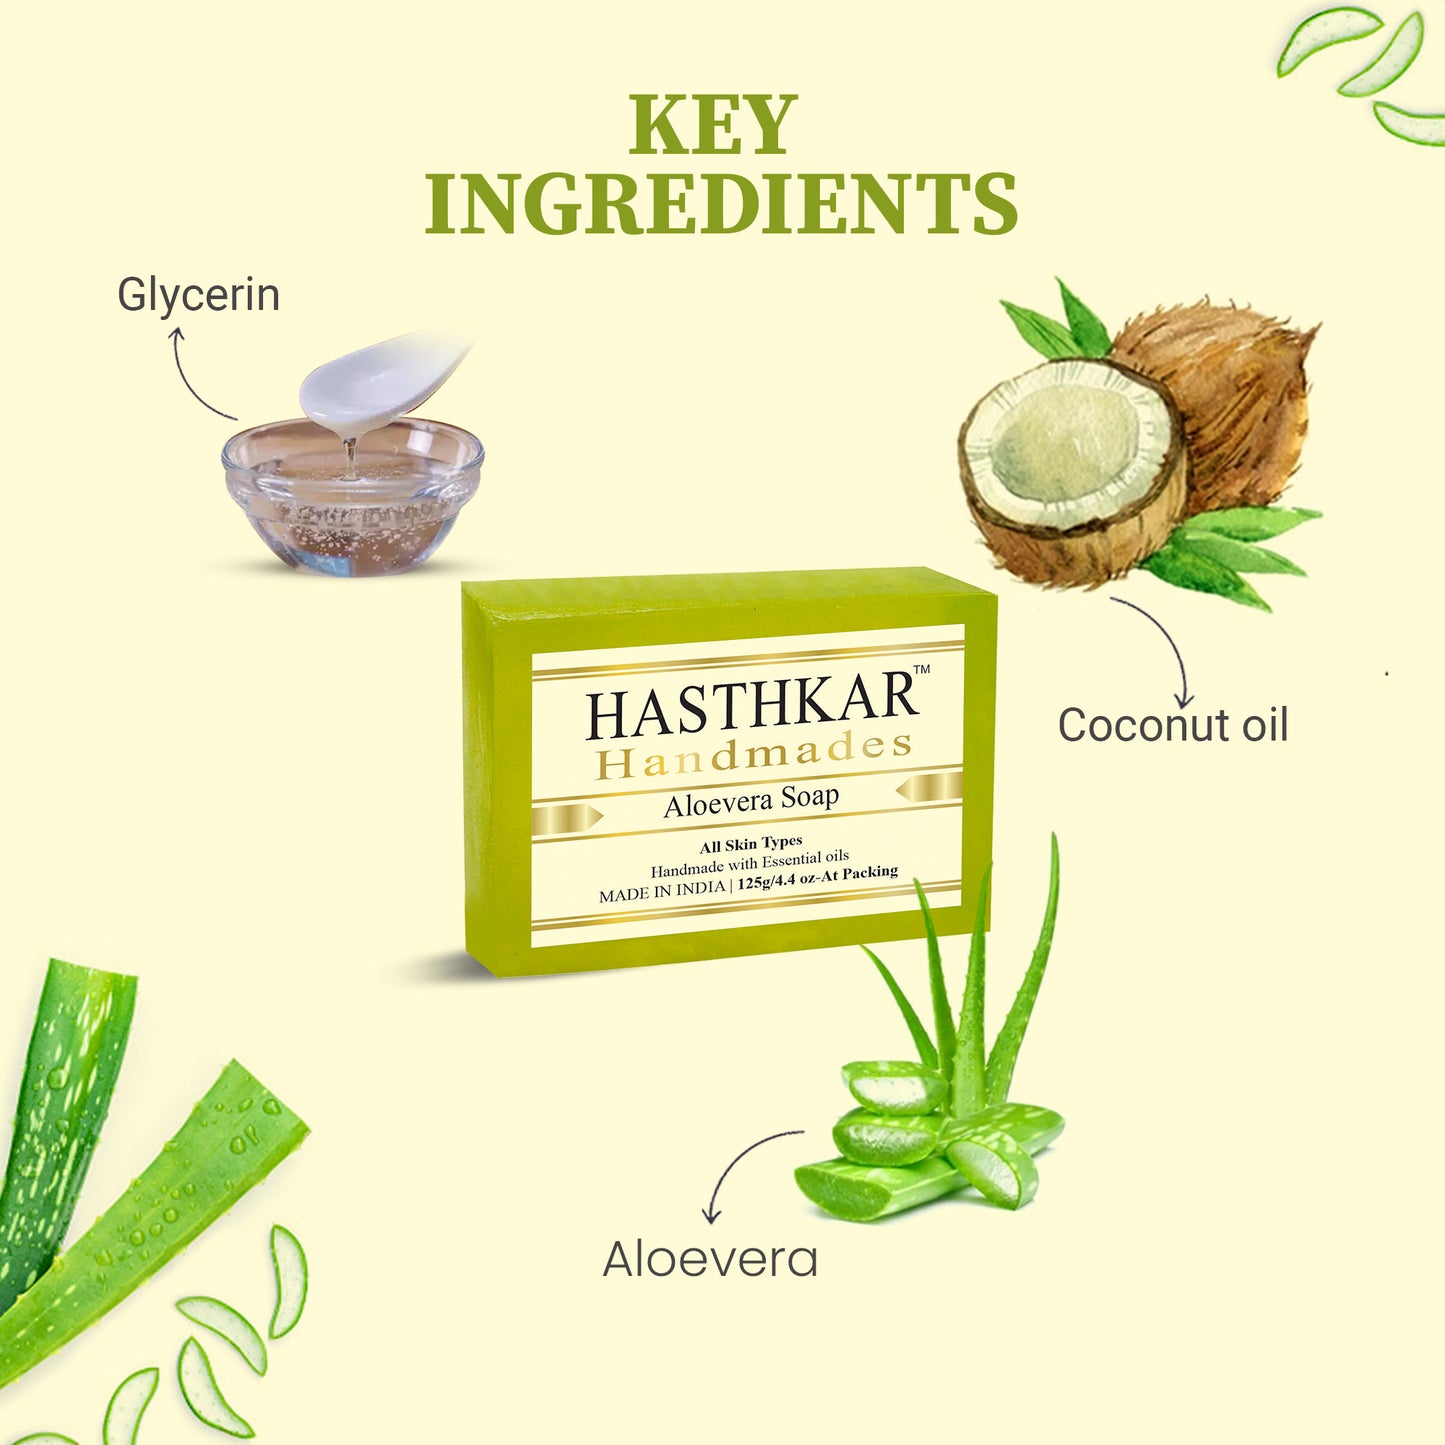 Hasthkar Handmades Glycerine Aloevera Soap 125gm Pack of 4